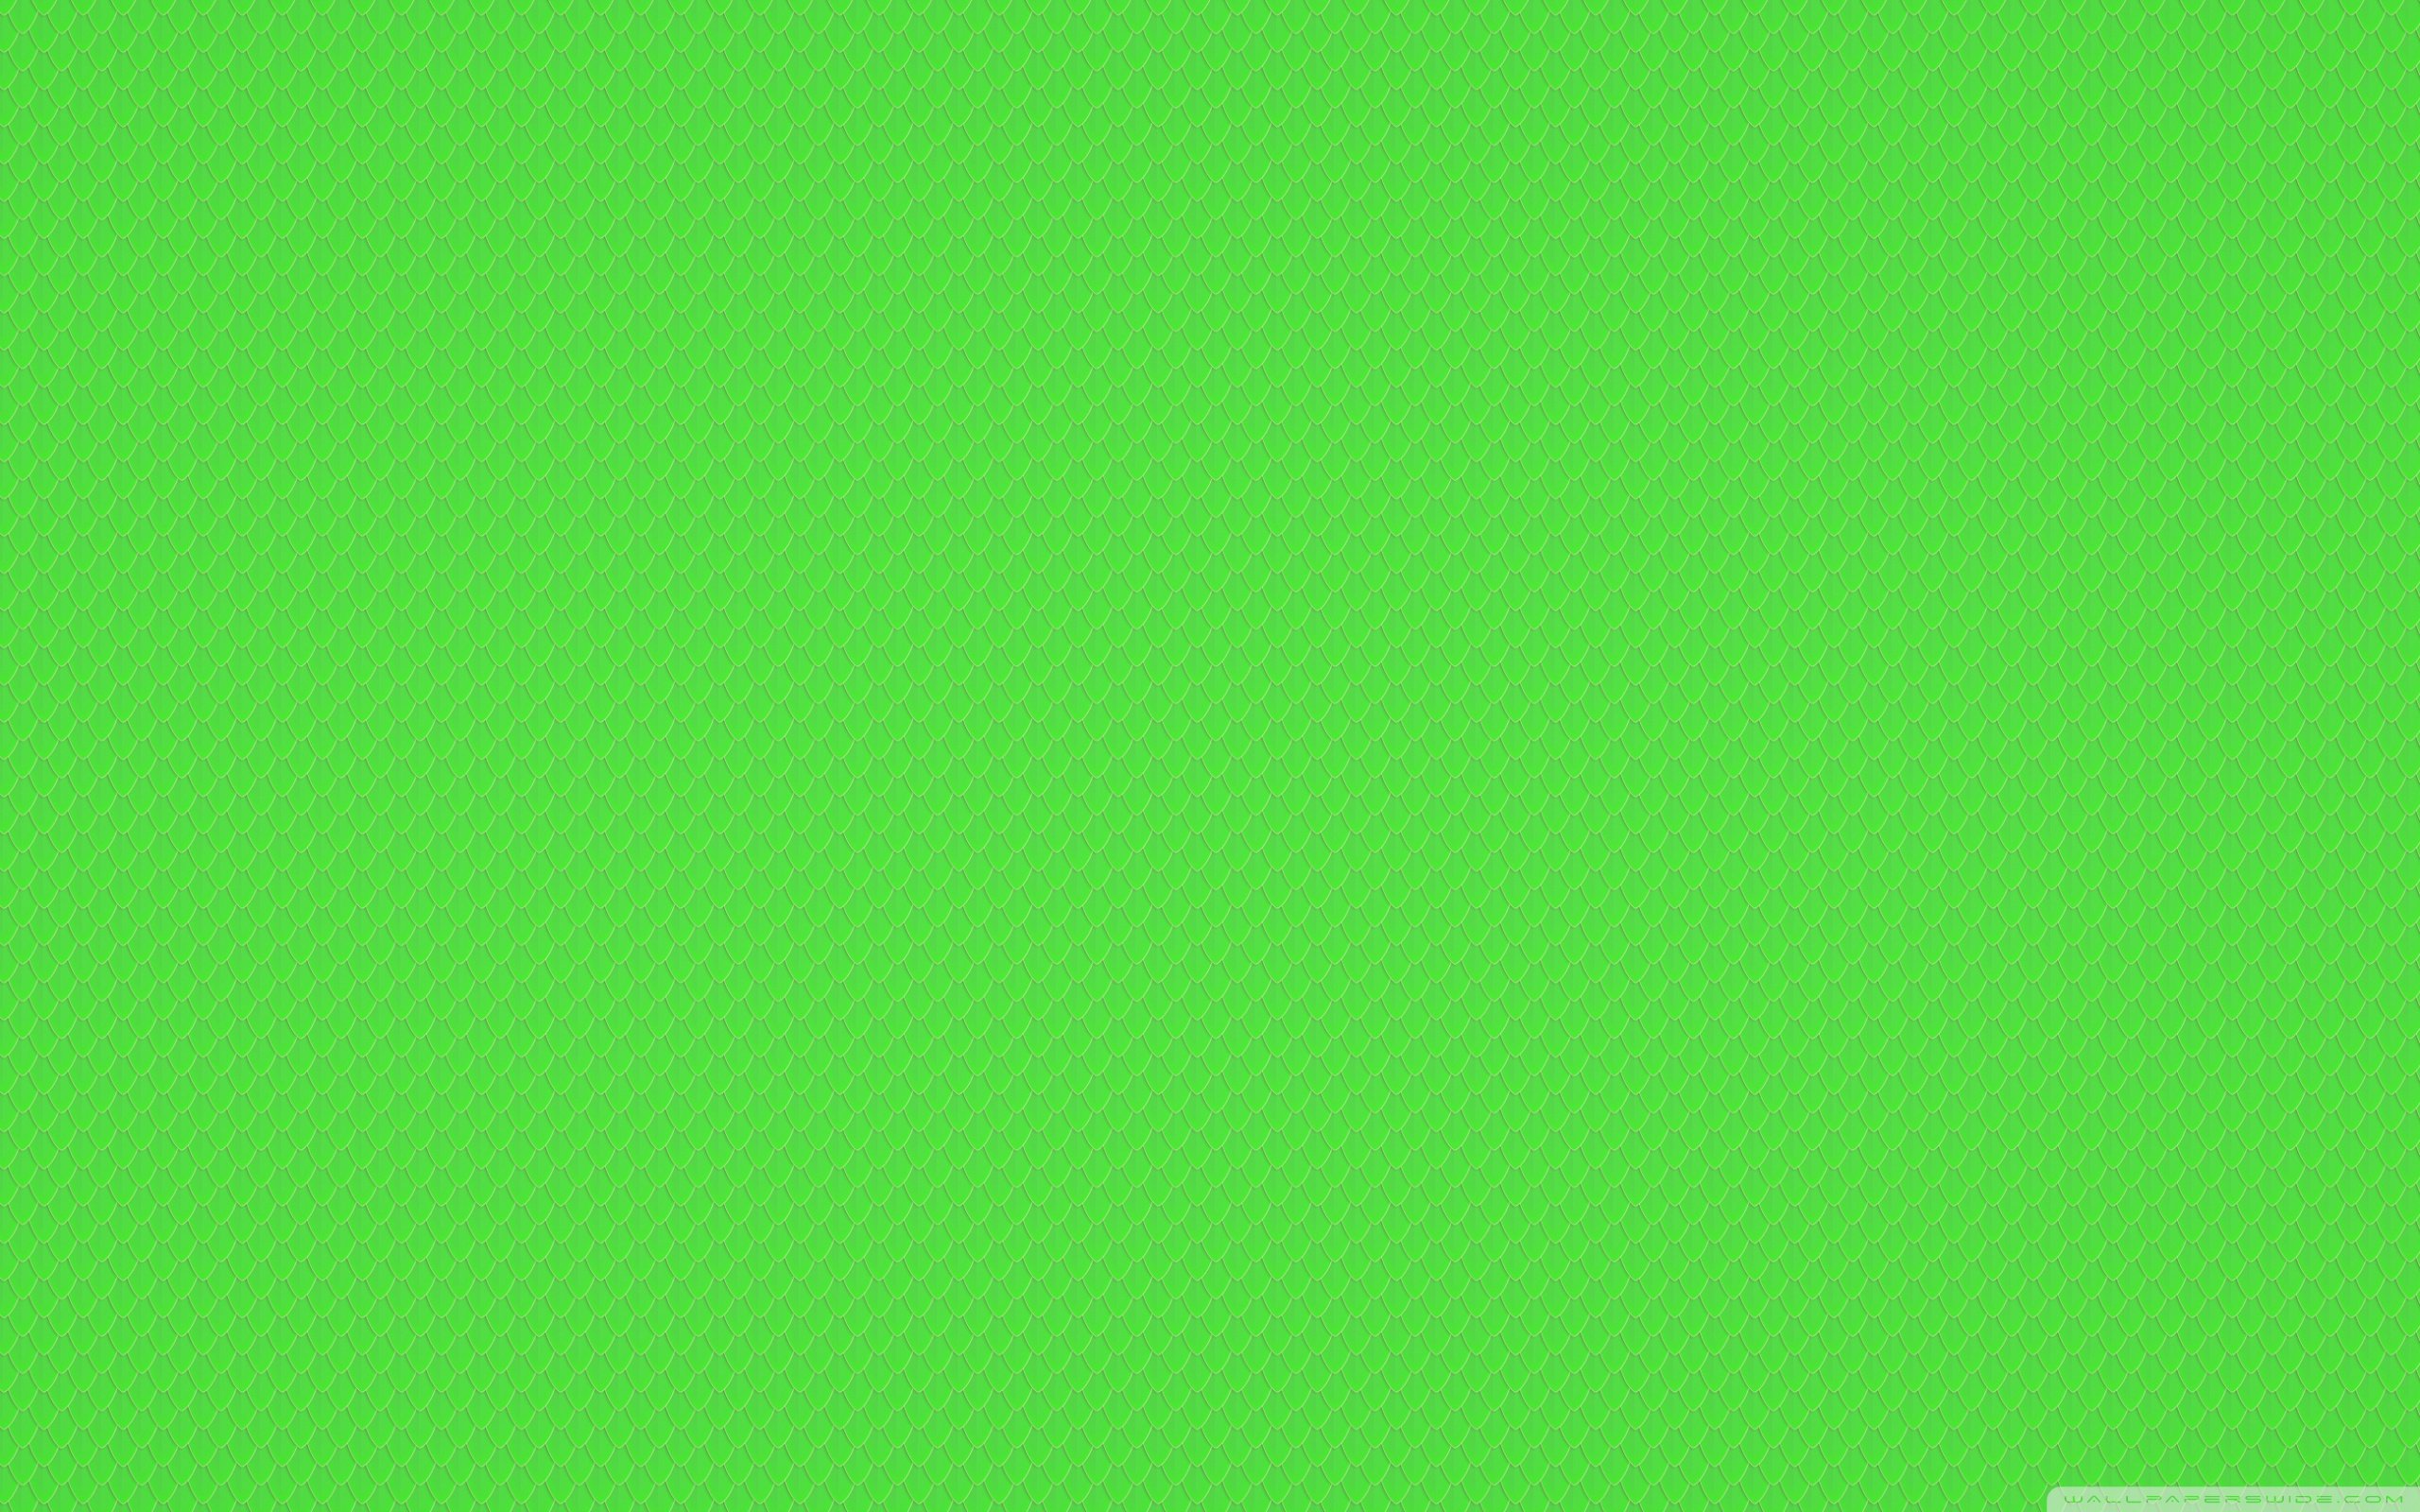 Слабо зеленый цвет. Фон однотонный. Зеленый фон. Зеленый однотонный. Светло зеленый фон.